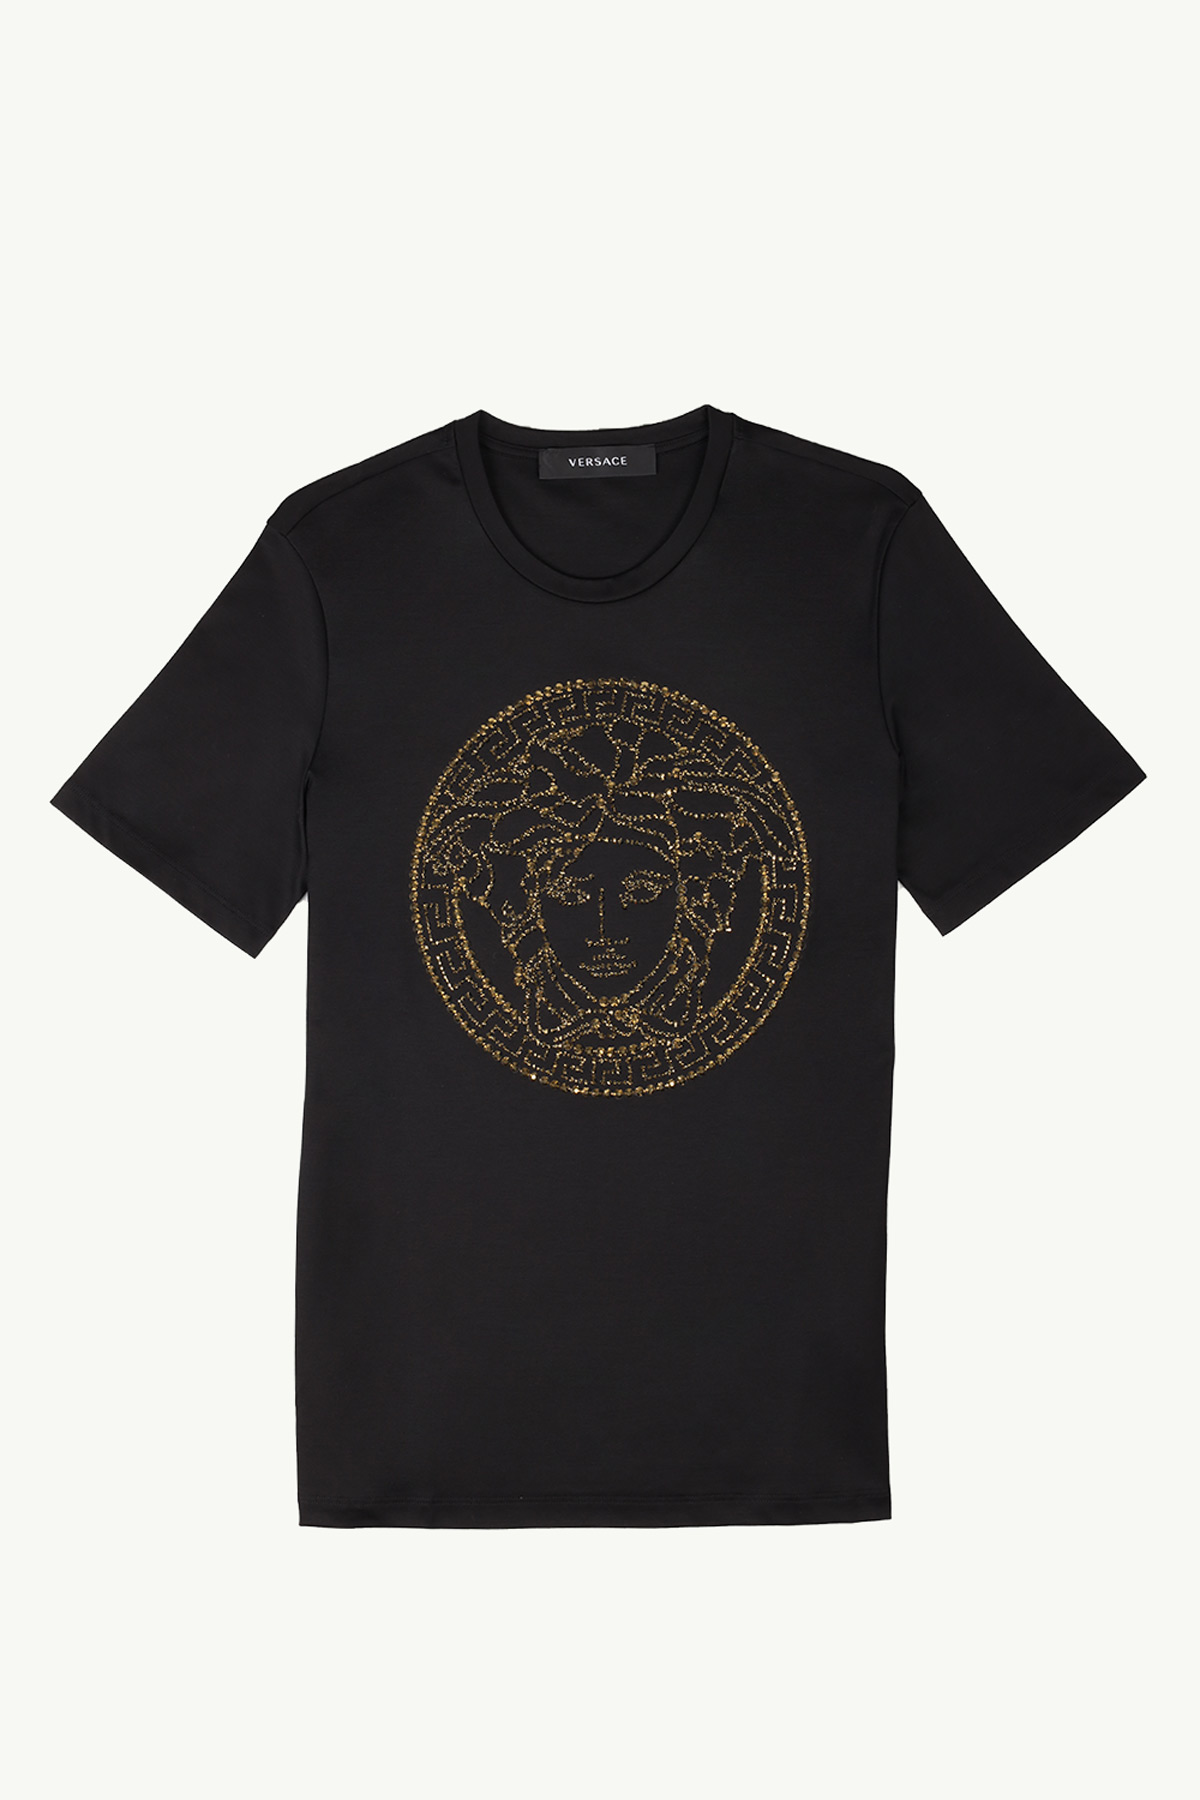 VERSACE Women Medusa Head Crystal-Embellished T-Shirt in Black/Gold 0